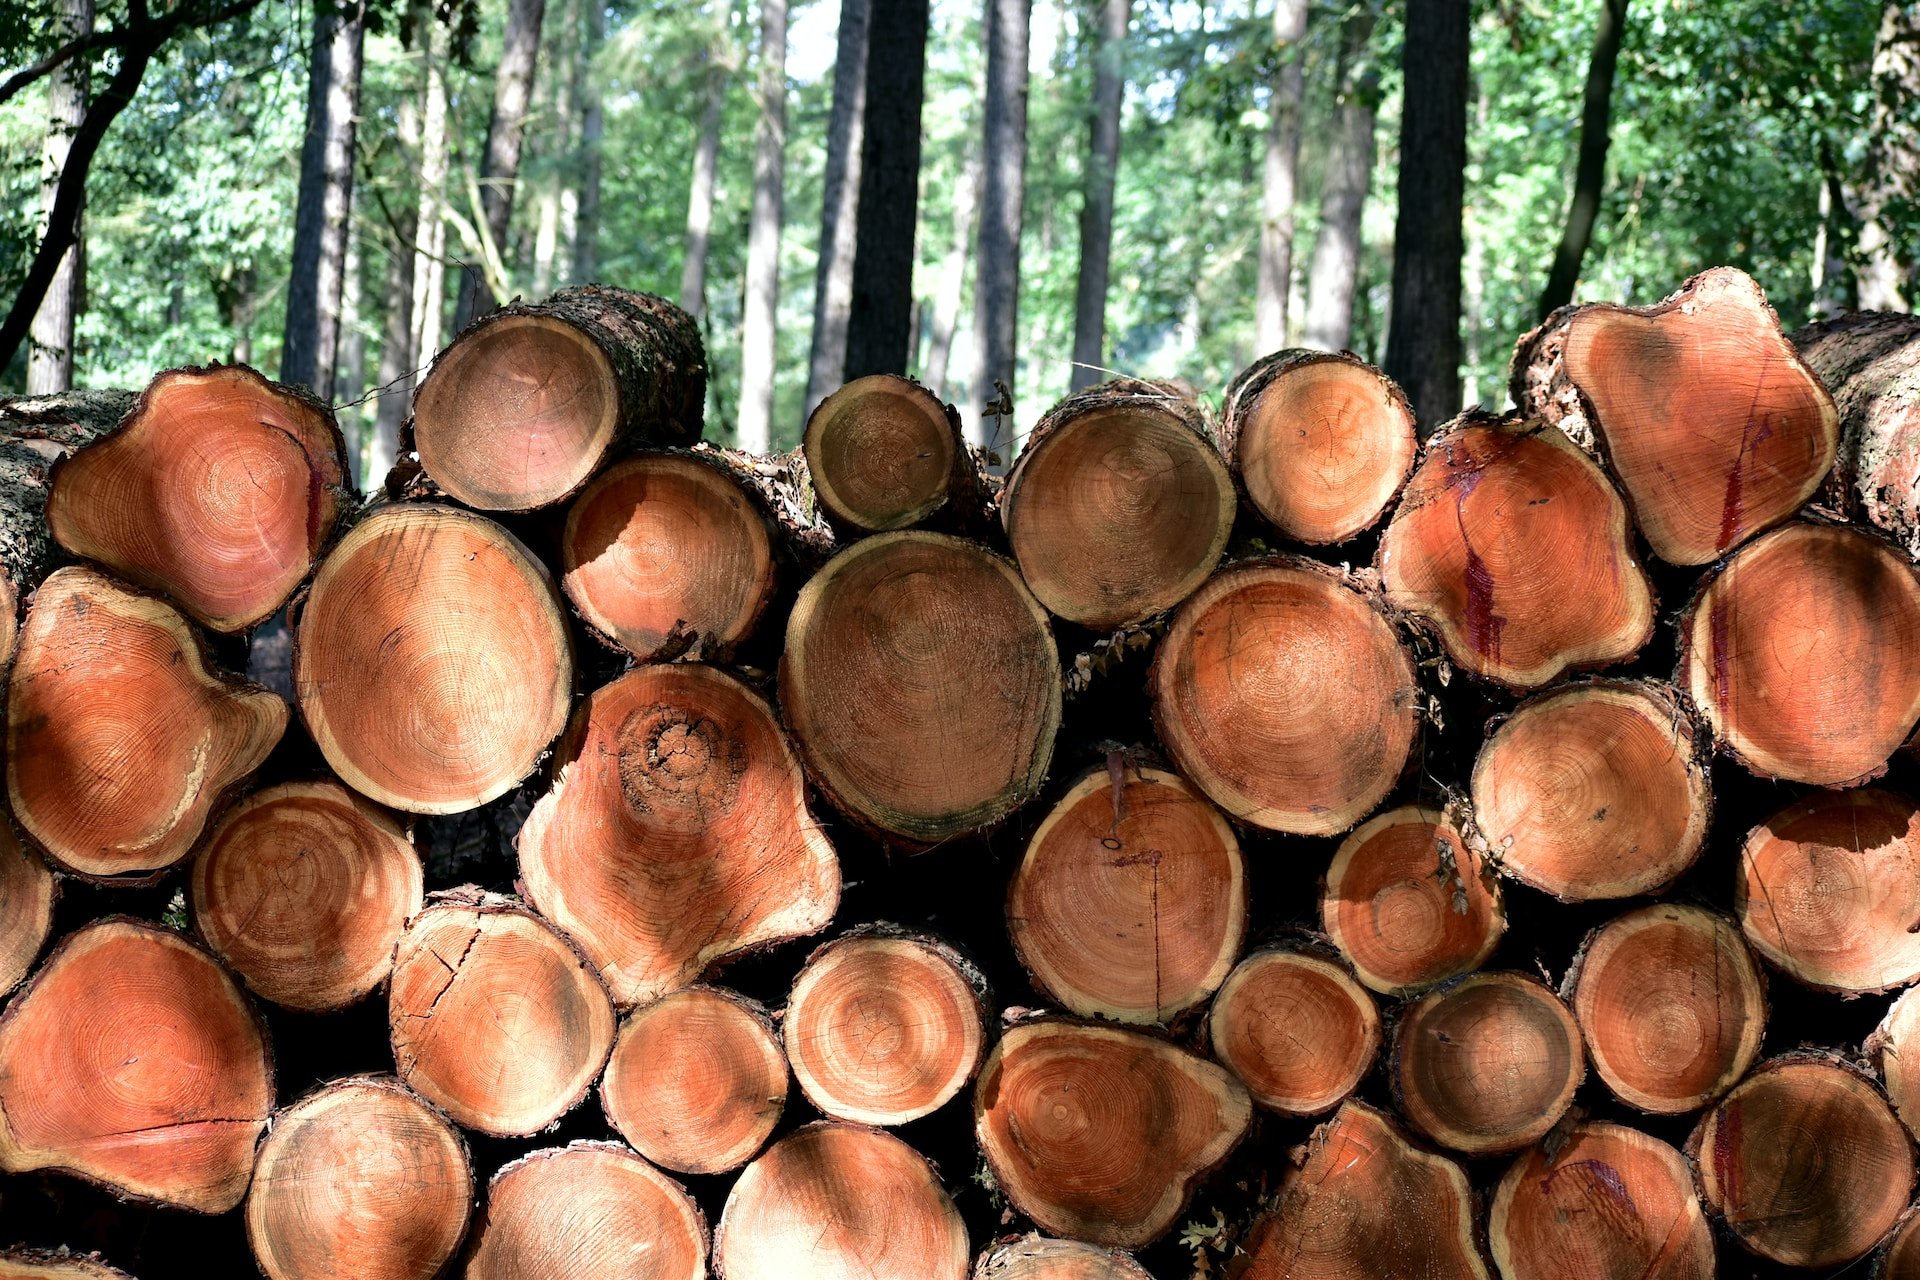 El problema de la tala indiscriminada de árboles